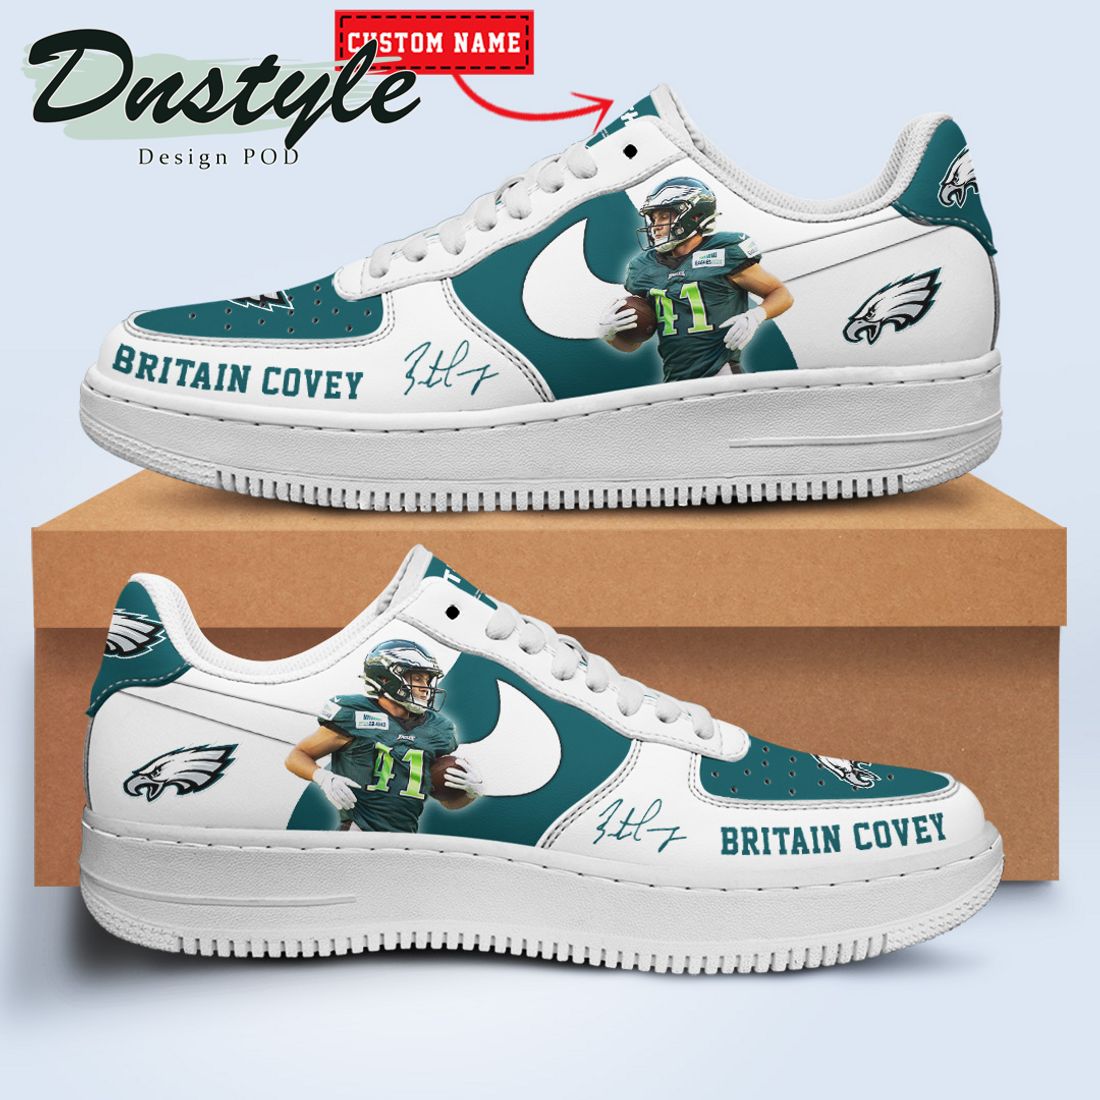 Britain Covey Philadelphia Eagles NFL Custom Name Signature Nike Air Force Shoes